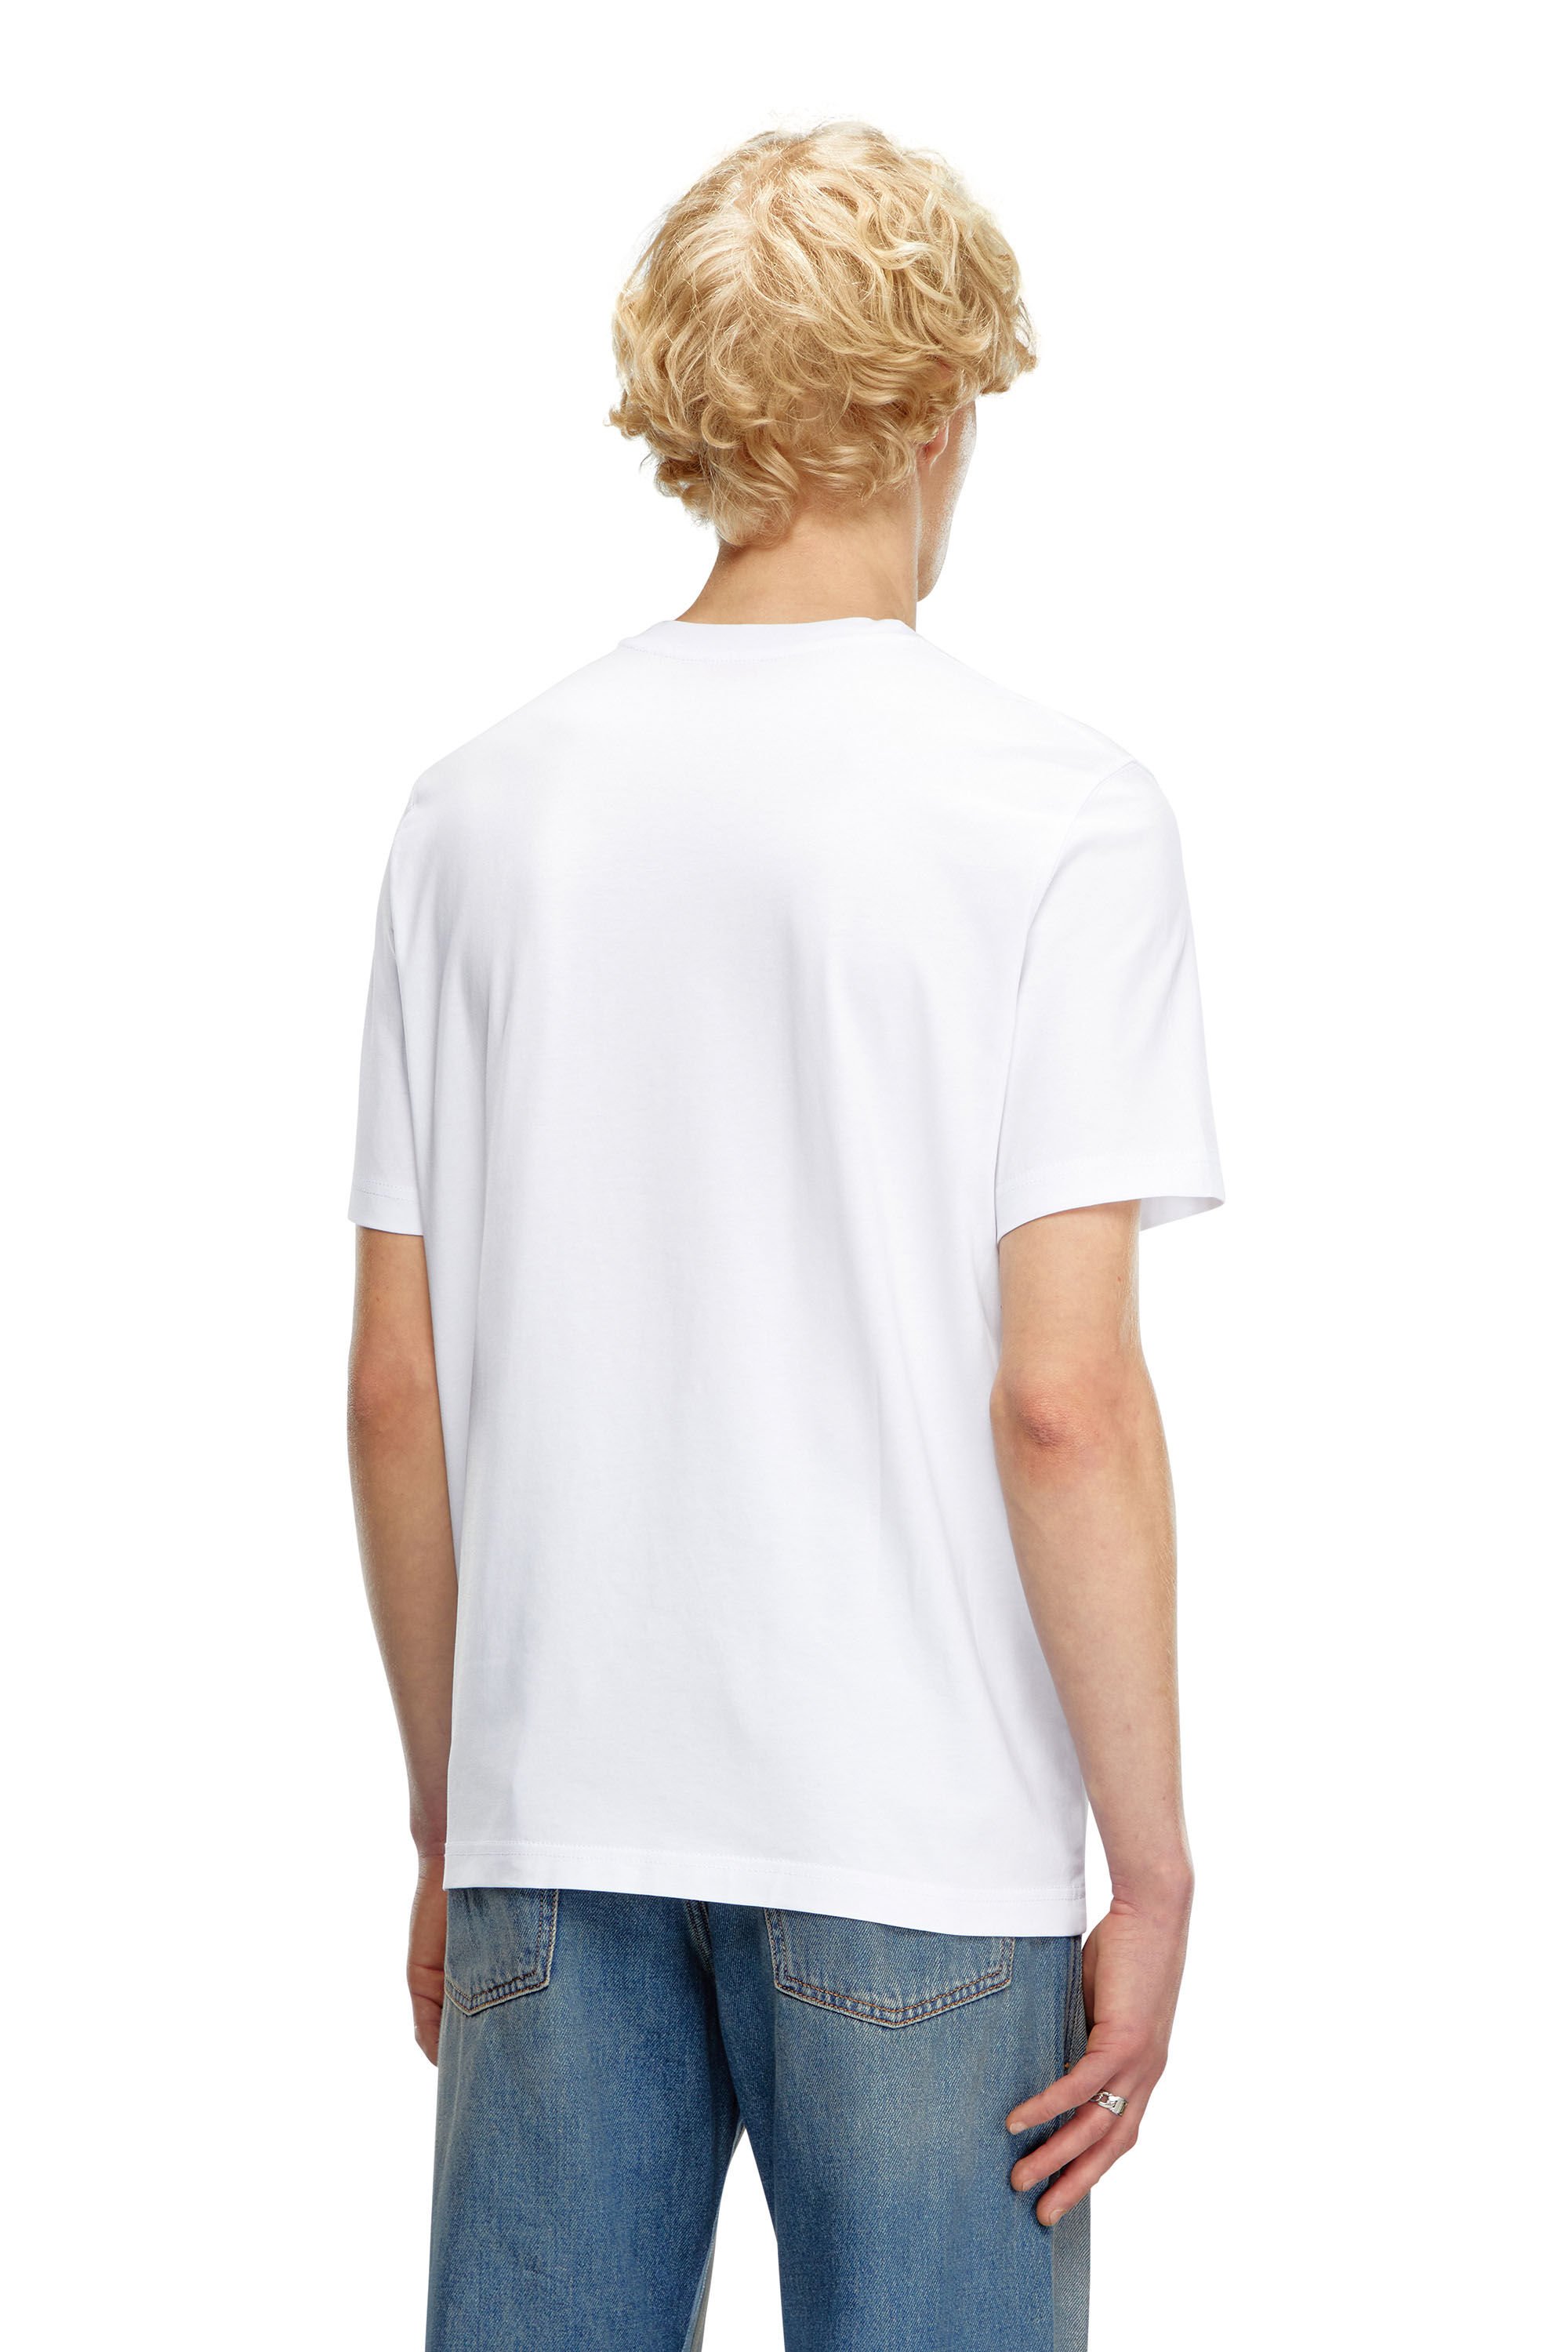 Diesel - T-ADJUST-Q7, Hombre Camiseta con logotipo Diesel borroso in Blanco - Image 4